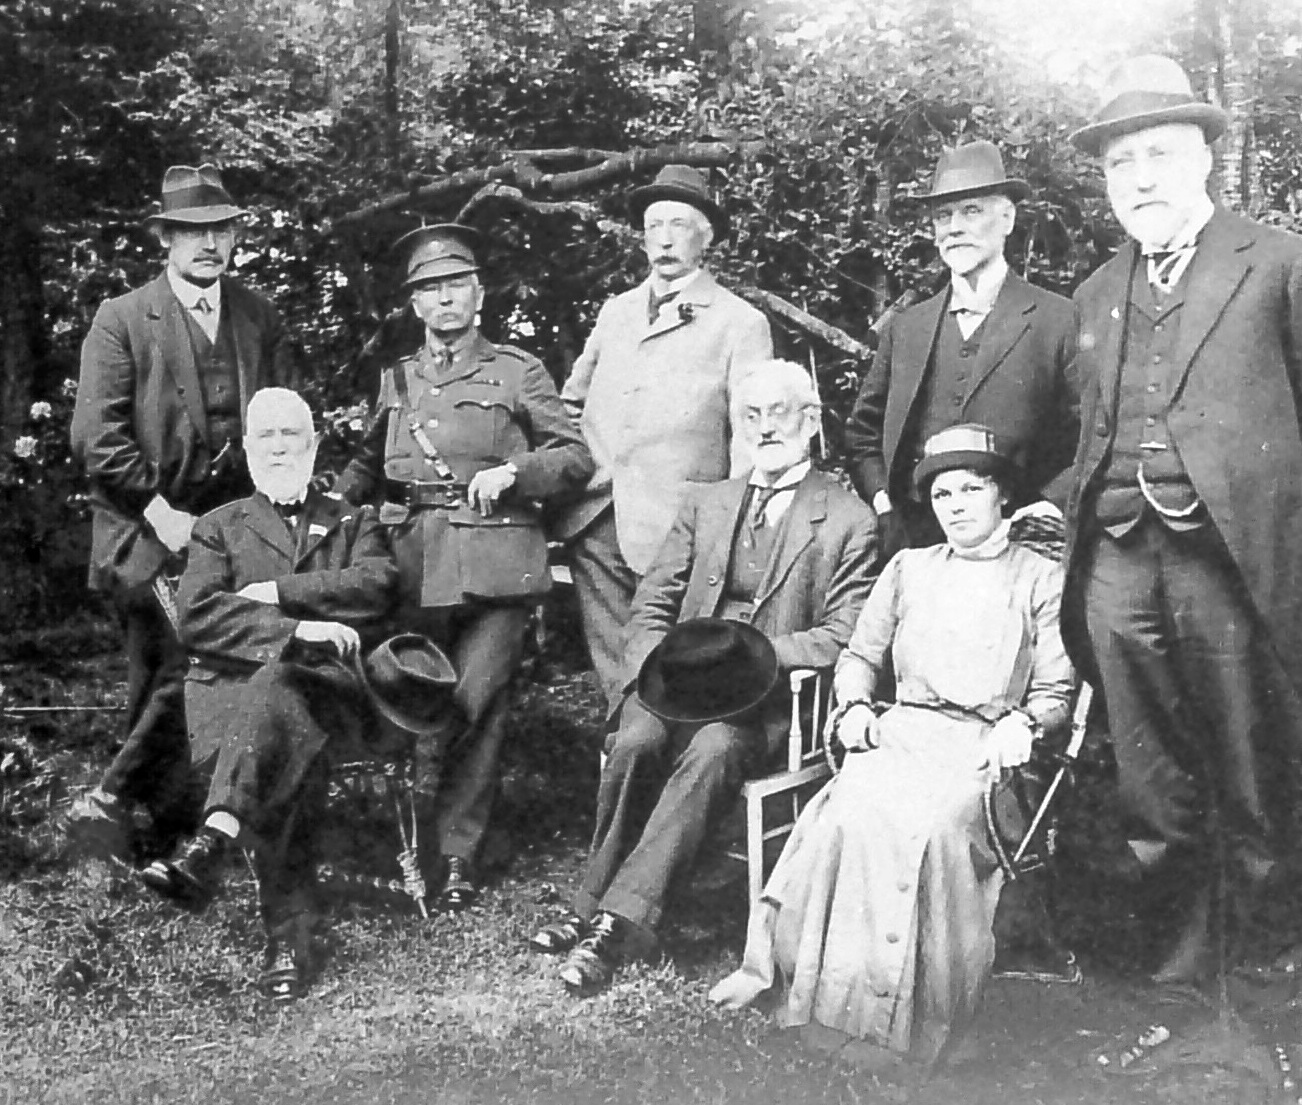 PORTRAIT: The Walt Whitman Group, 1918